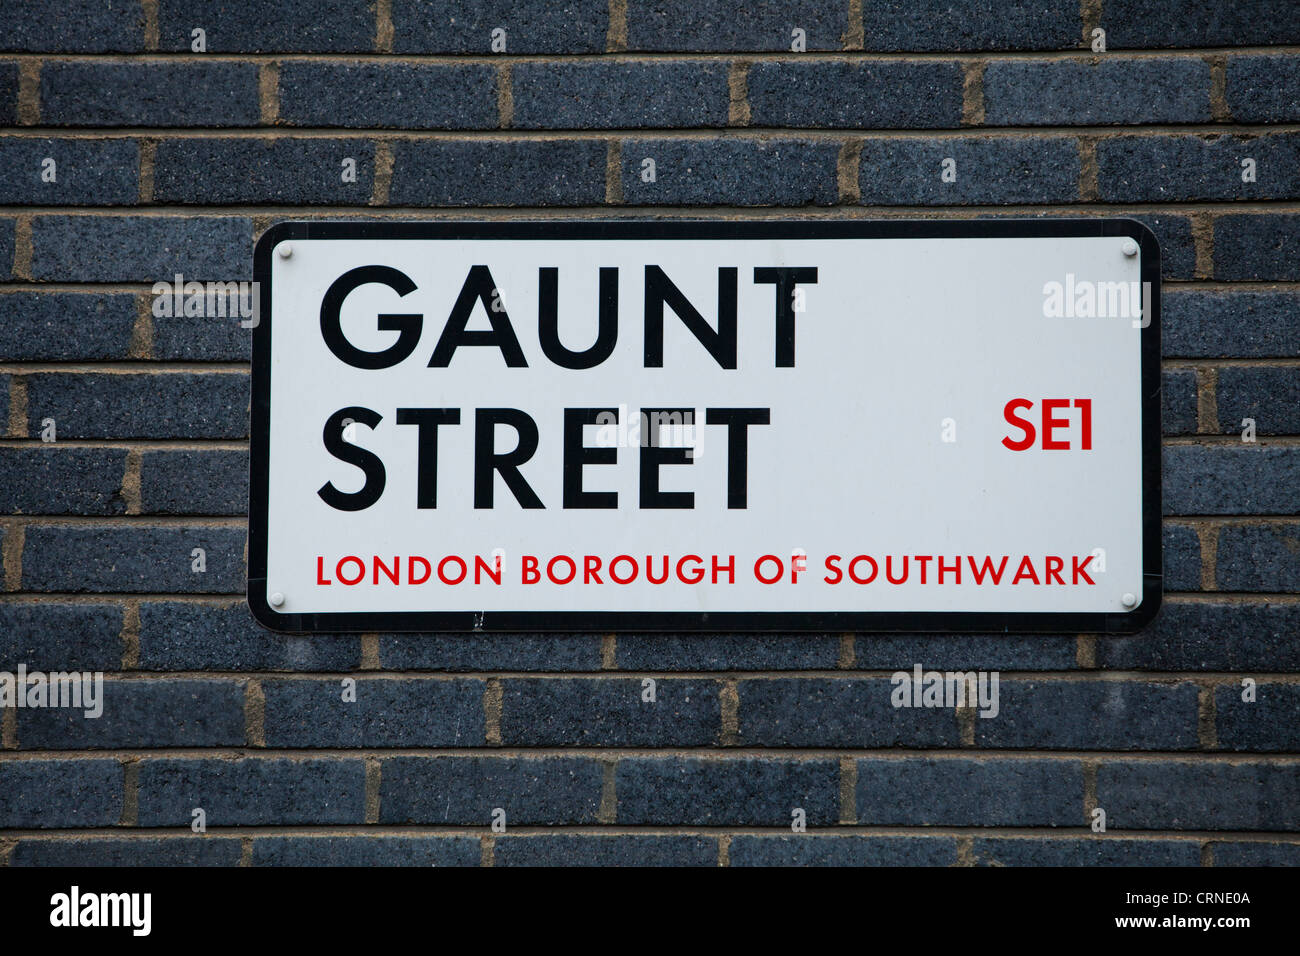 Gaunt Street SE1 Straßenschild in London Borough of Southwark. Stockfoto